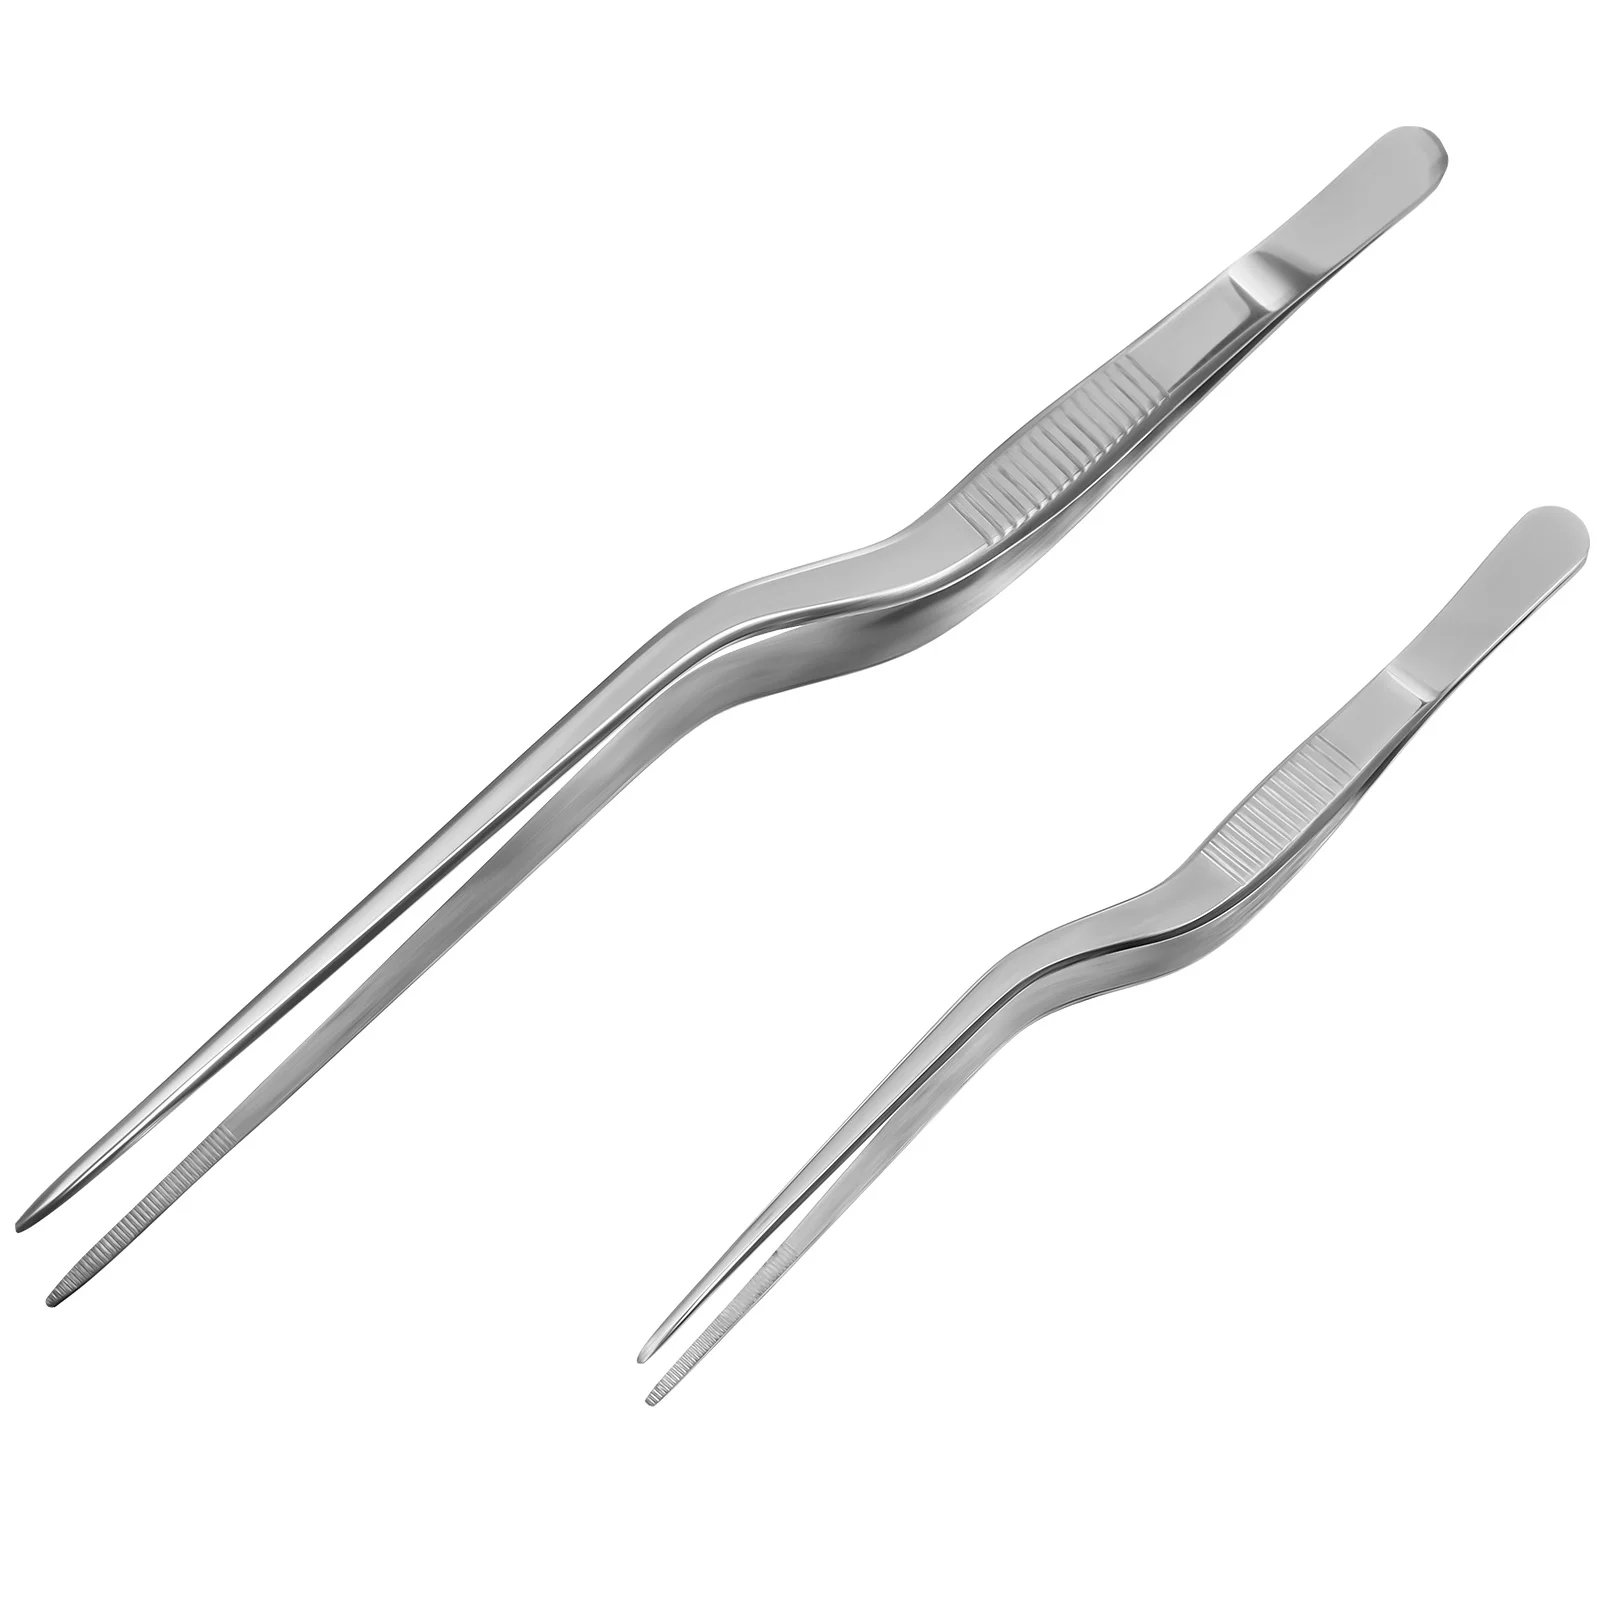 

2 Pcs Stainless Steel Tweezers Medical Restaurant Clip Food Steak Tongs Cooking Fish Bone Removing Tools BBQ Kitchen utensils